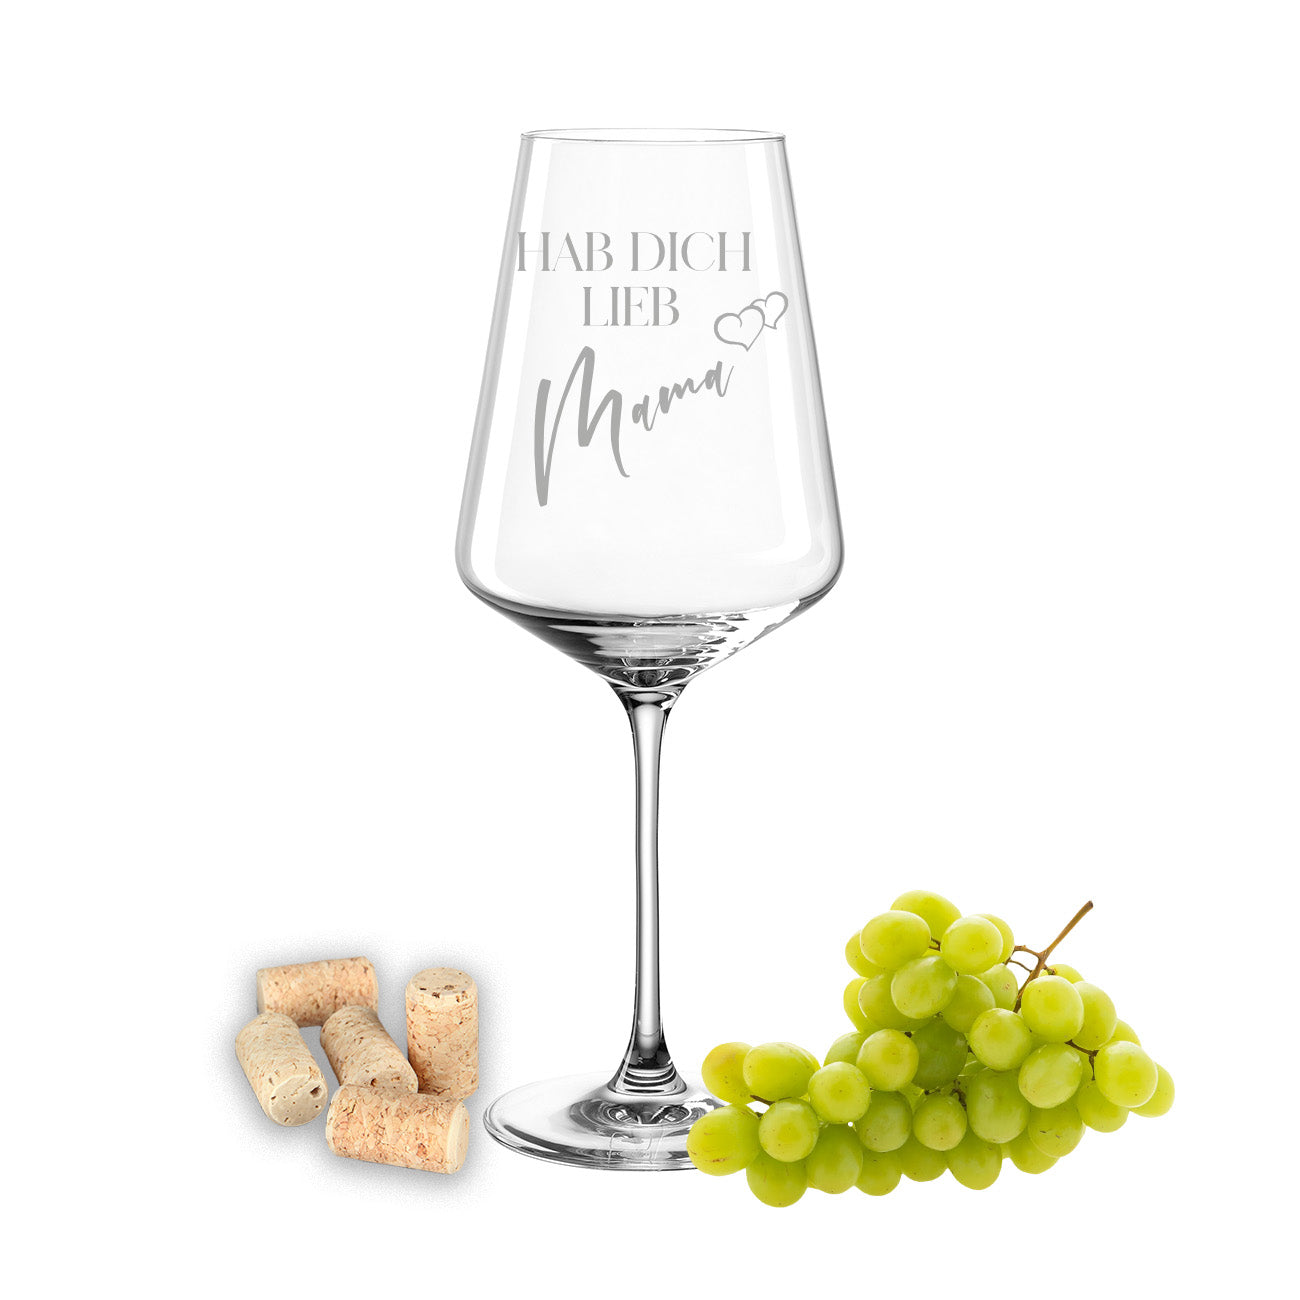 Weinglas mit Gravur Leonardo Puccini "HAB DICH LIEB MAMA"